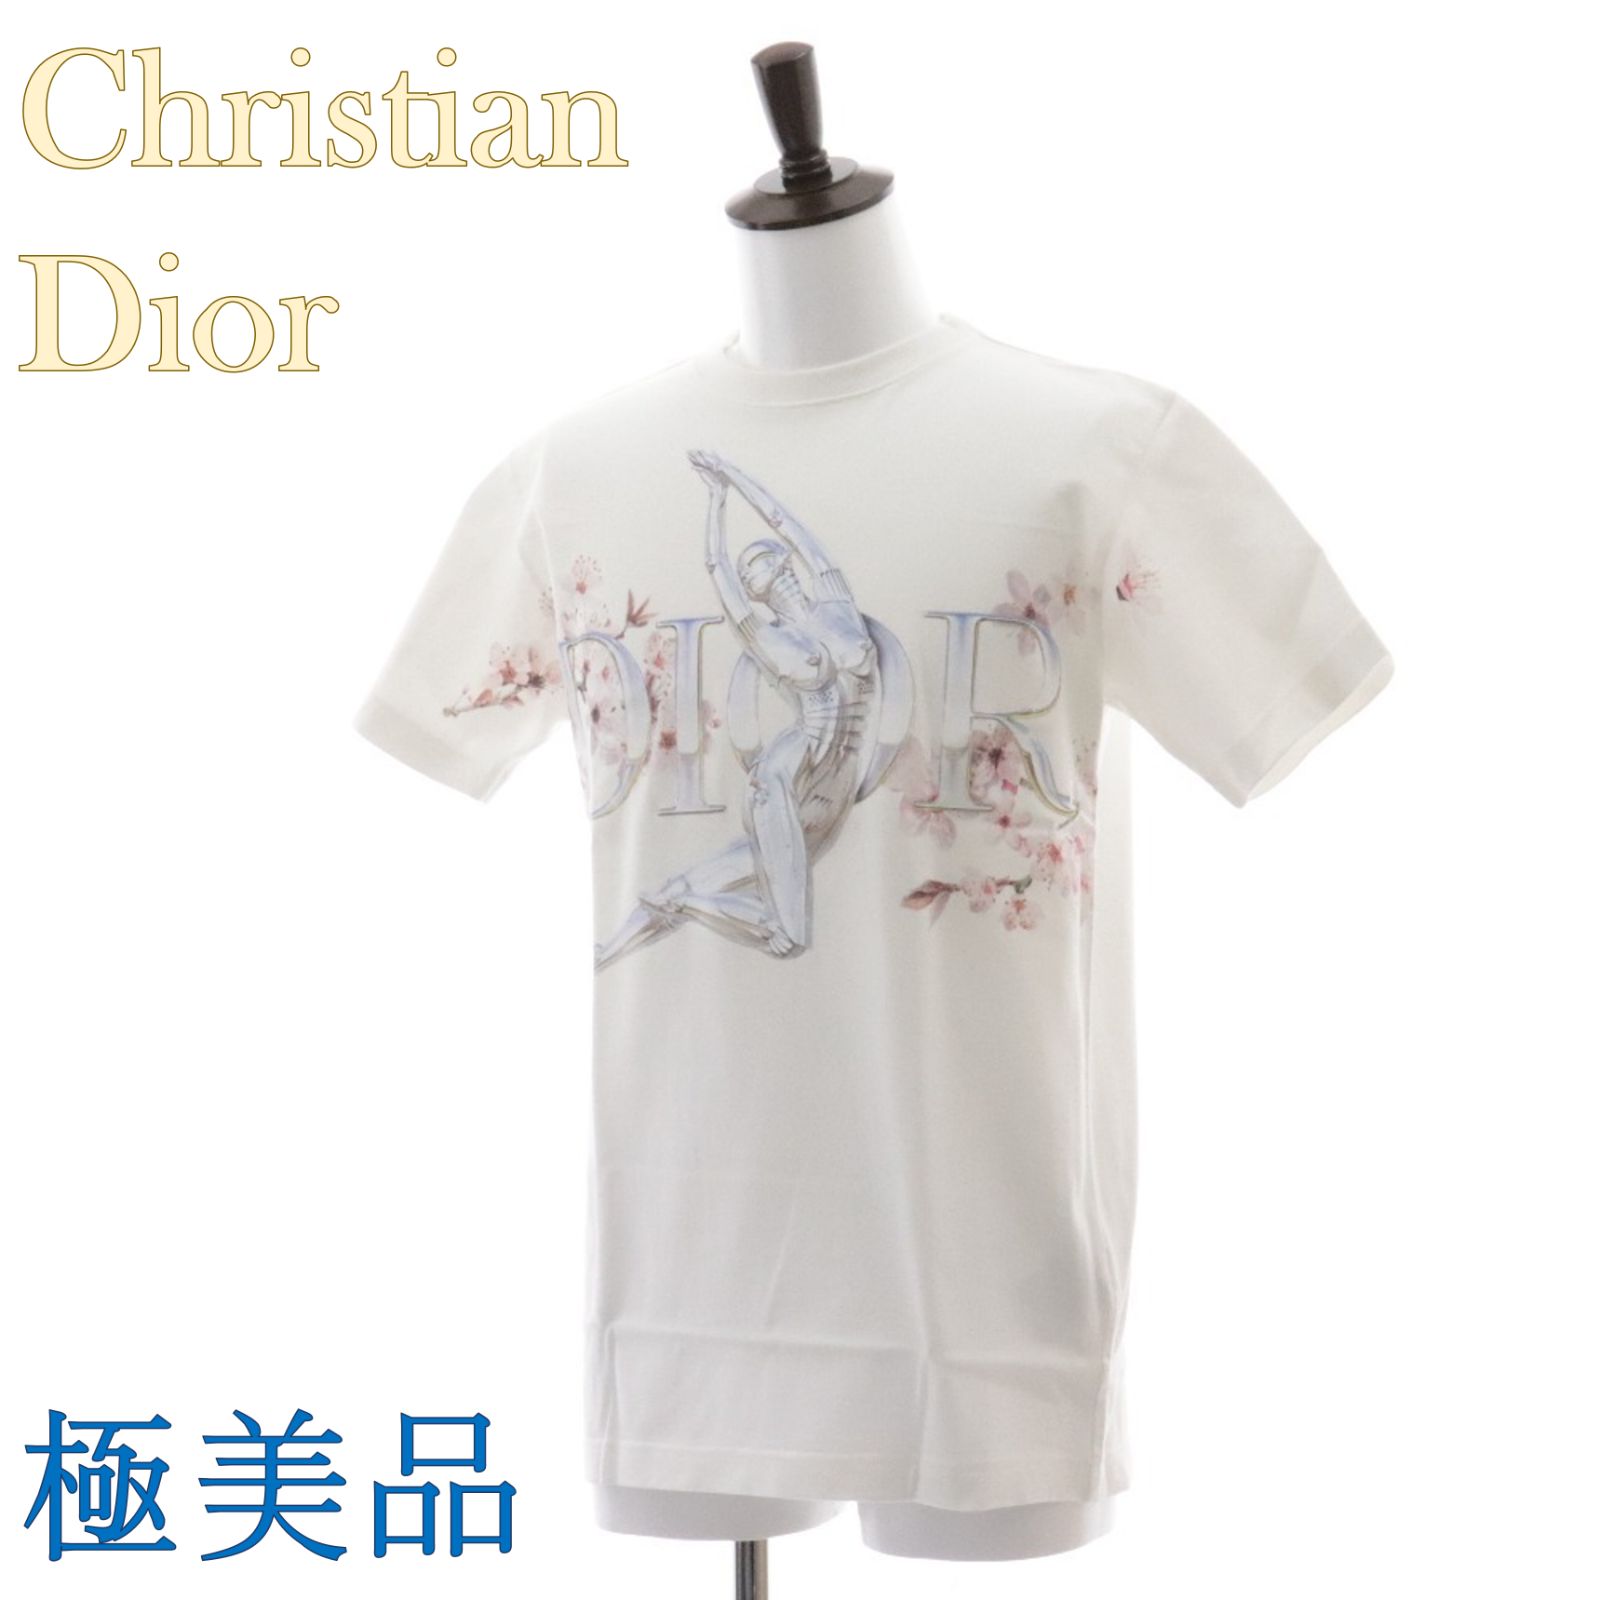 Dior tシャツ SORAYAMA コラボ セクシーロボ